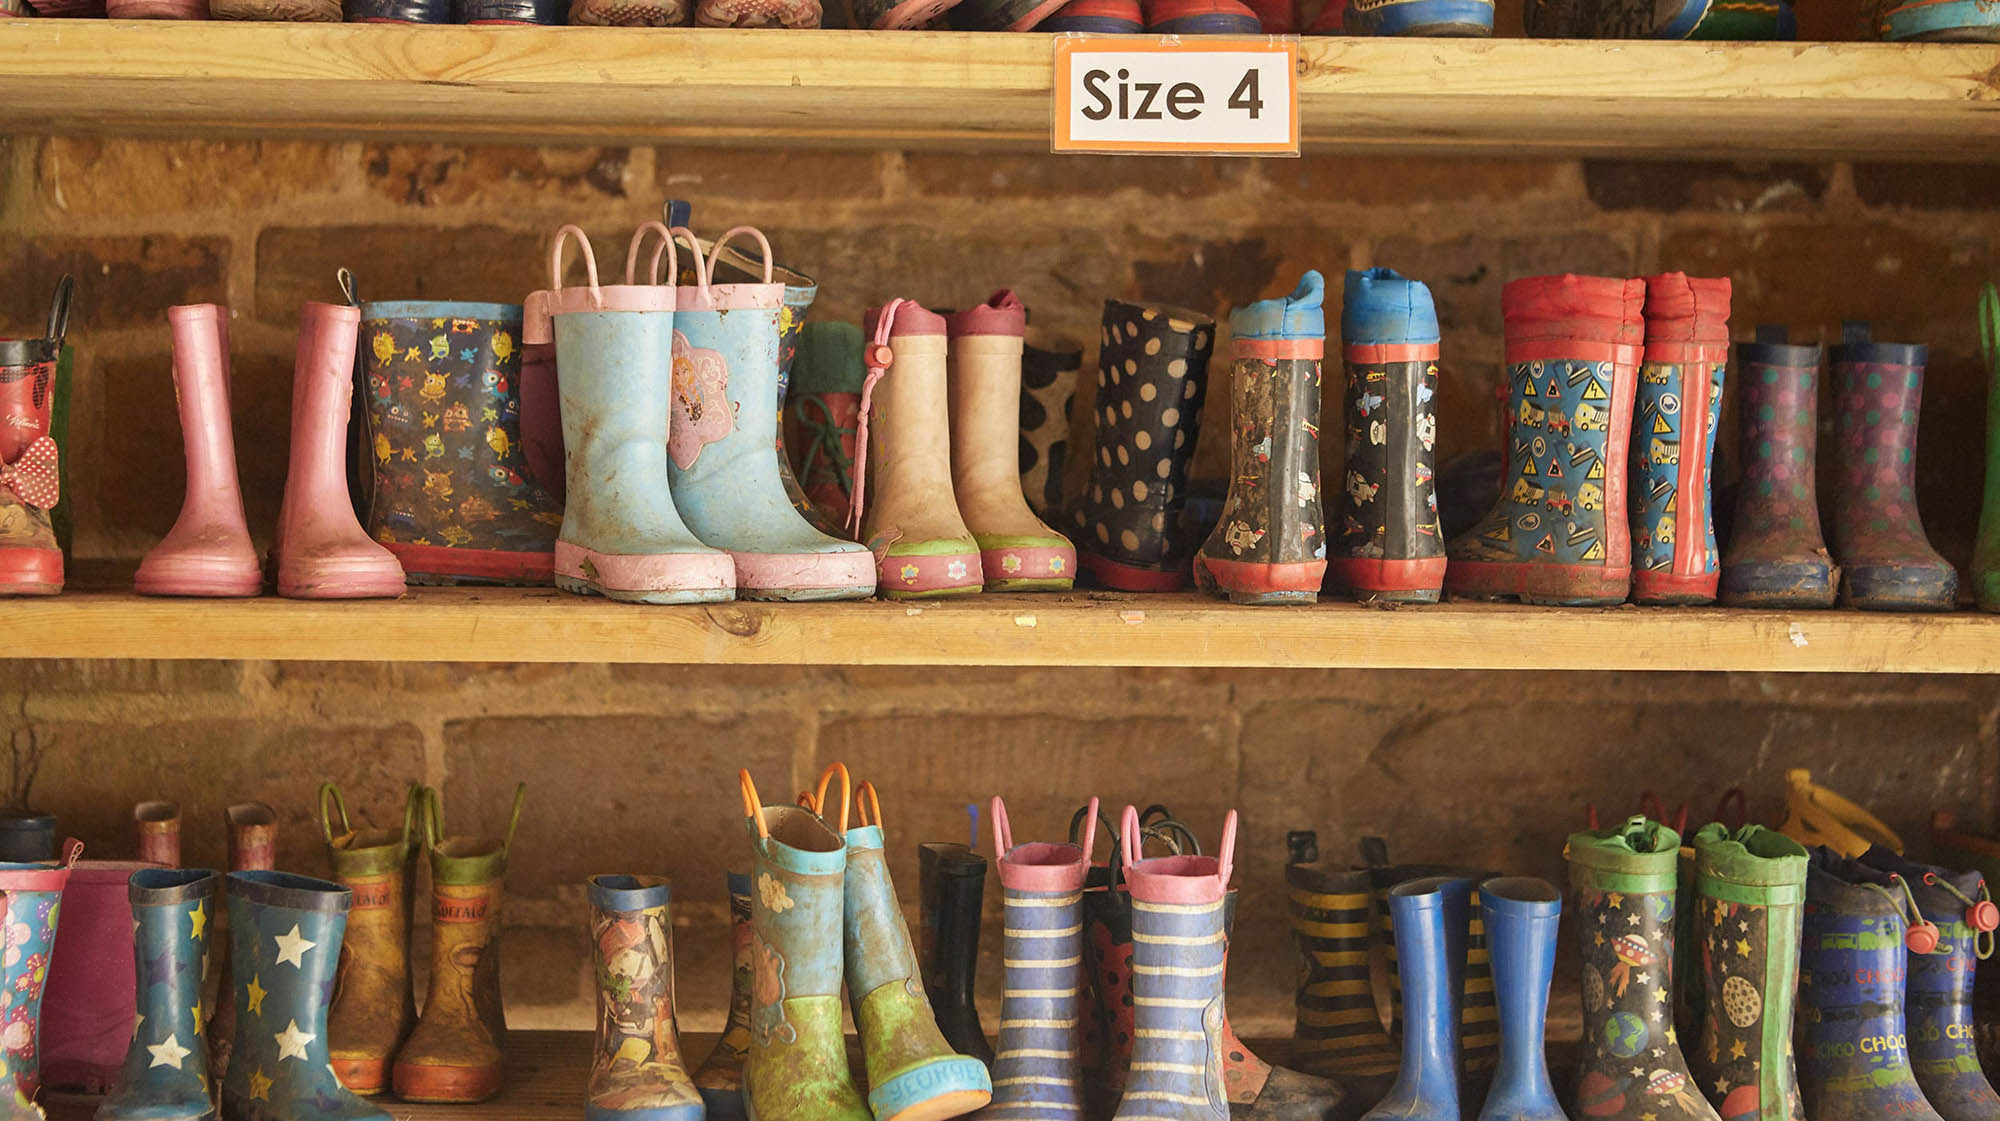 Children's wellington boots on shelf